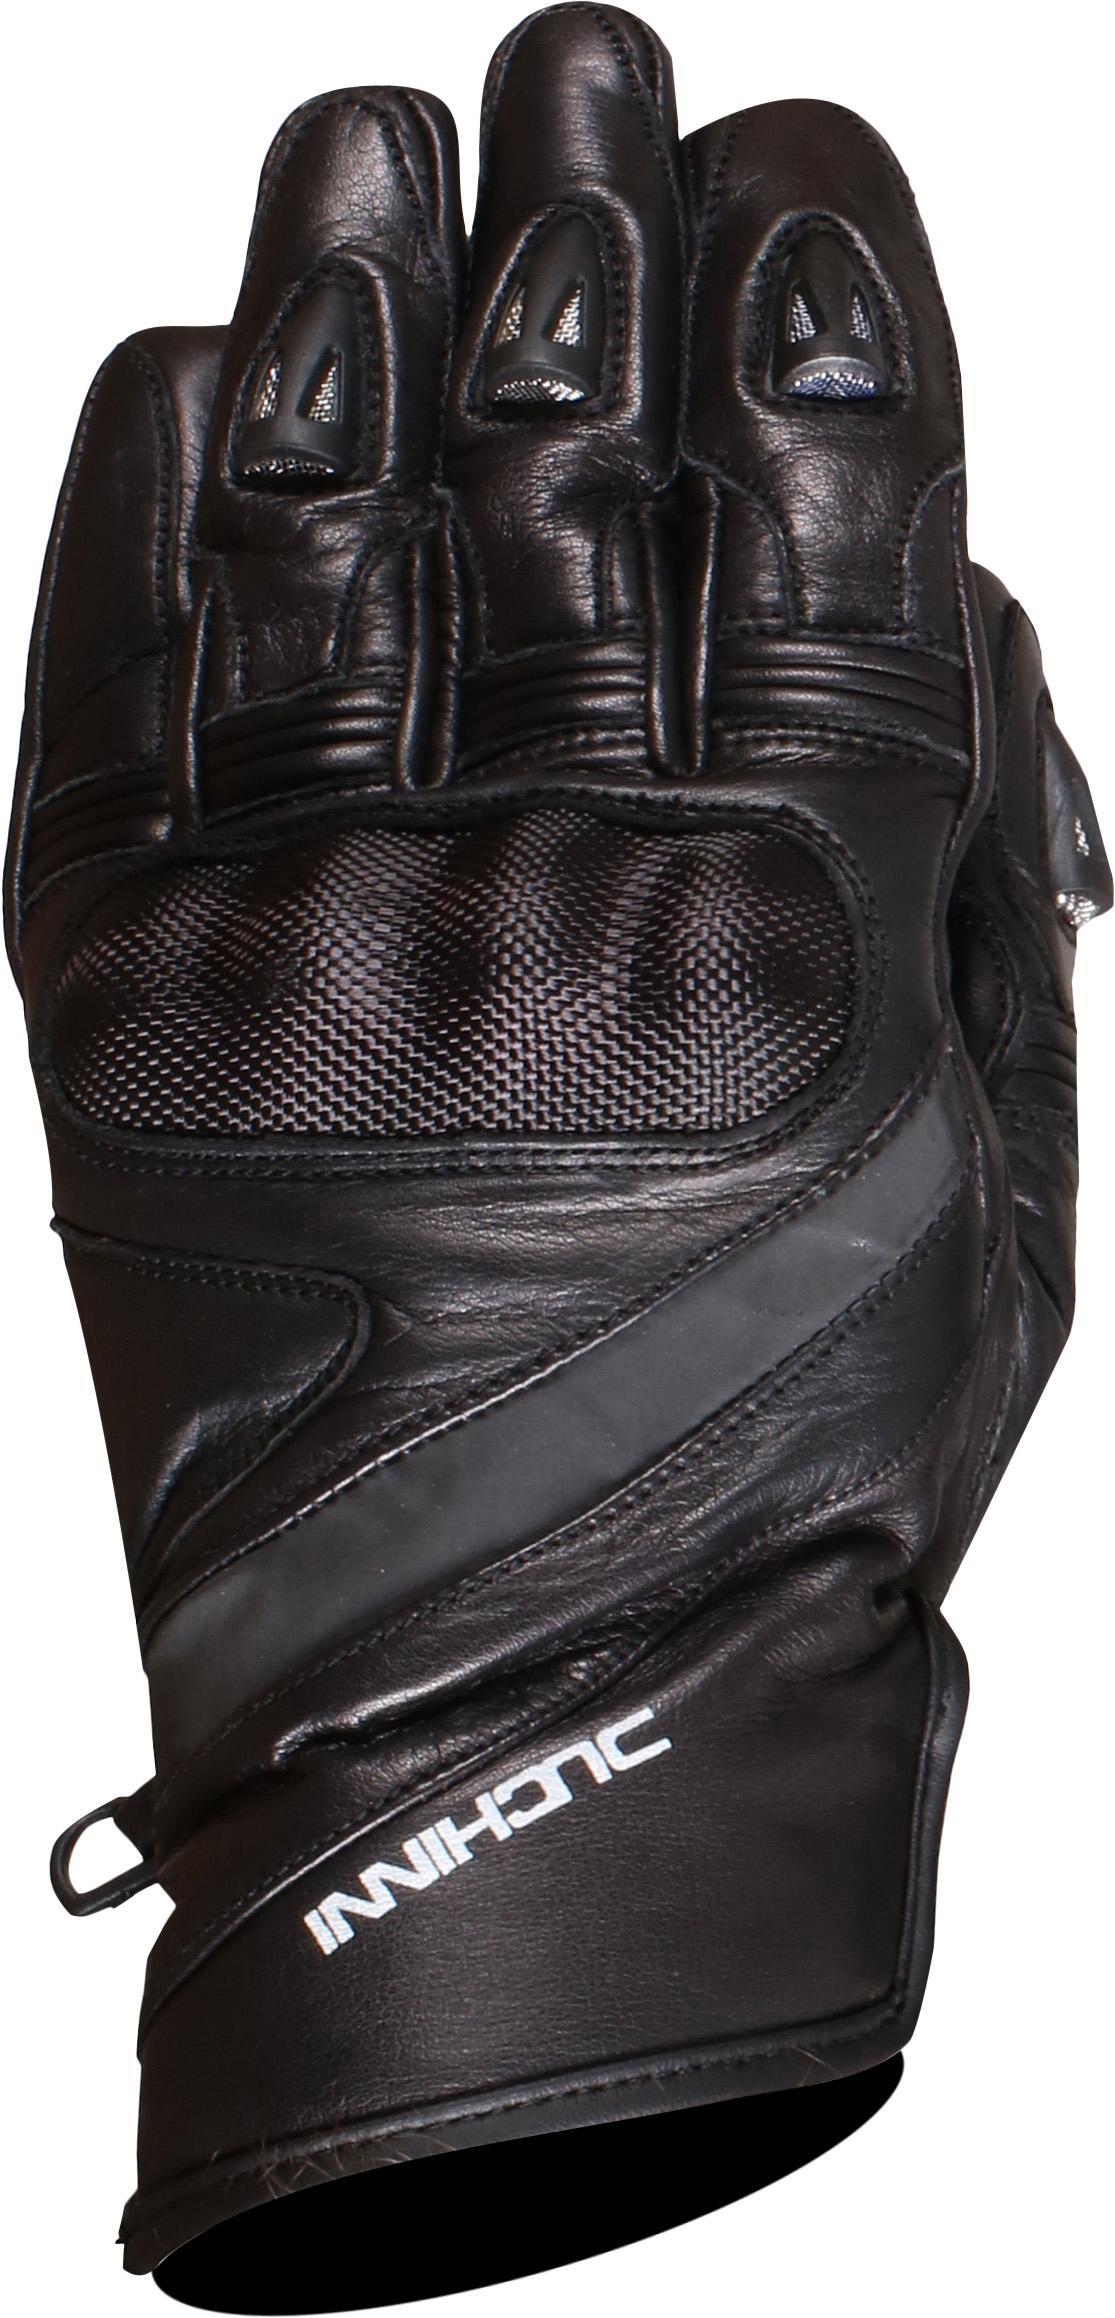 Duchinni Fresco Motorcycle Gloves - Black, L